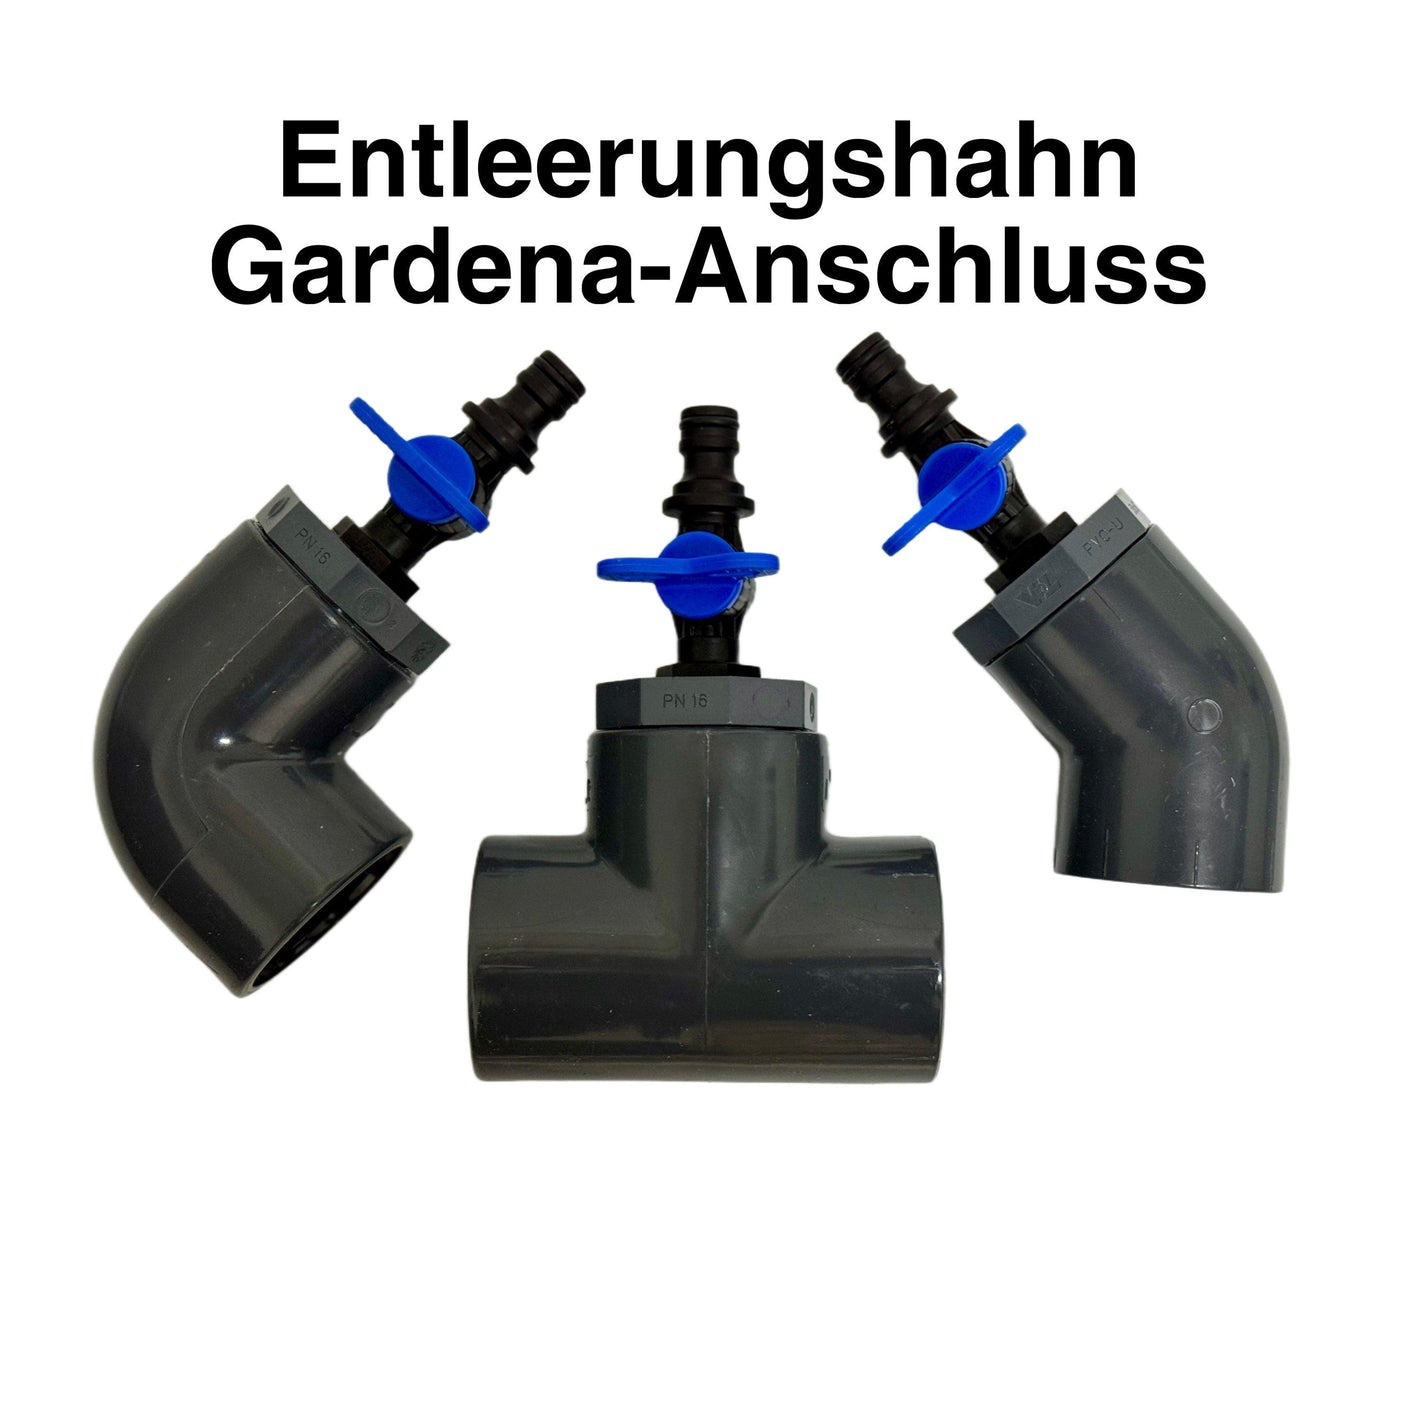 Entleerungshahn Gardena-Anschluss - Poolteg Shop